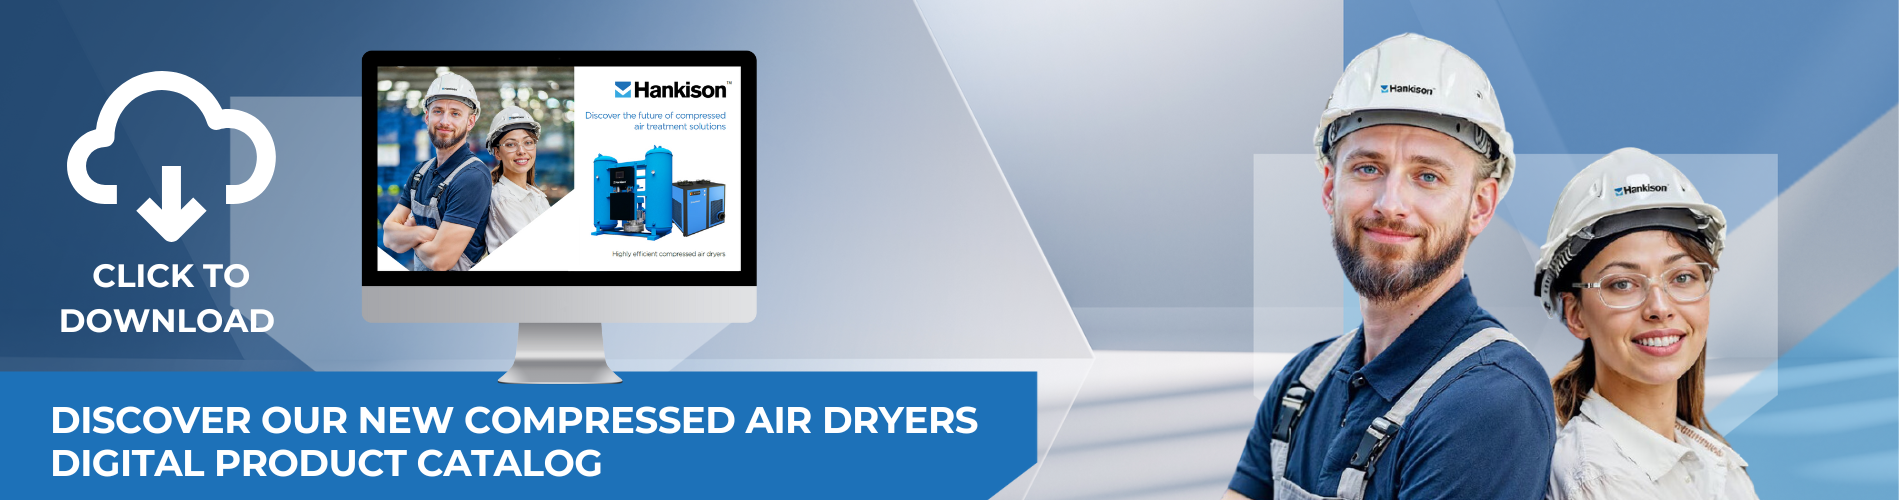 Hankison Compressed Air Dryers Catalog Download banner | Hankison 